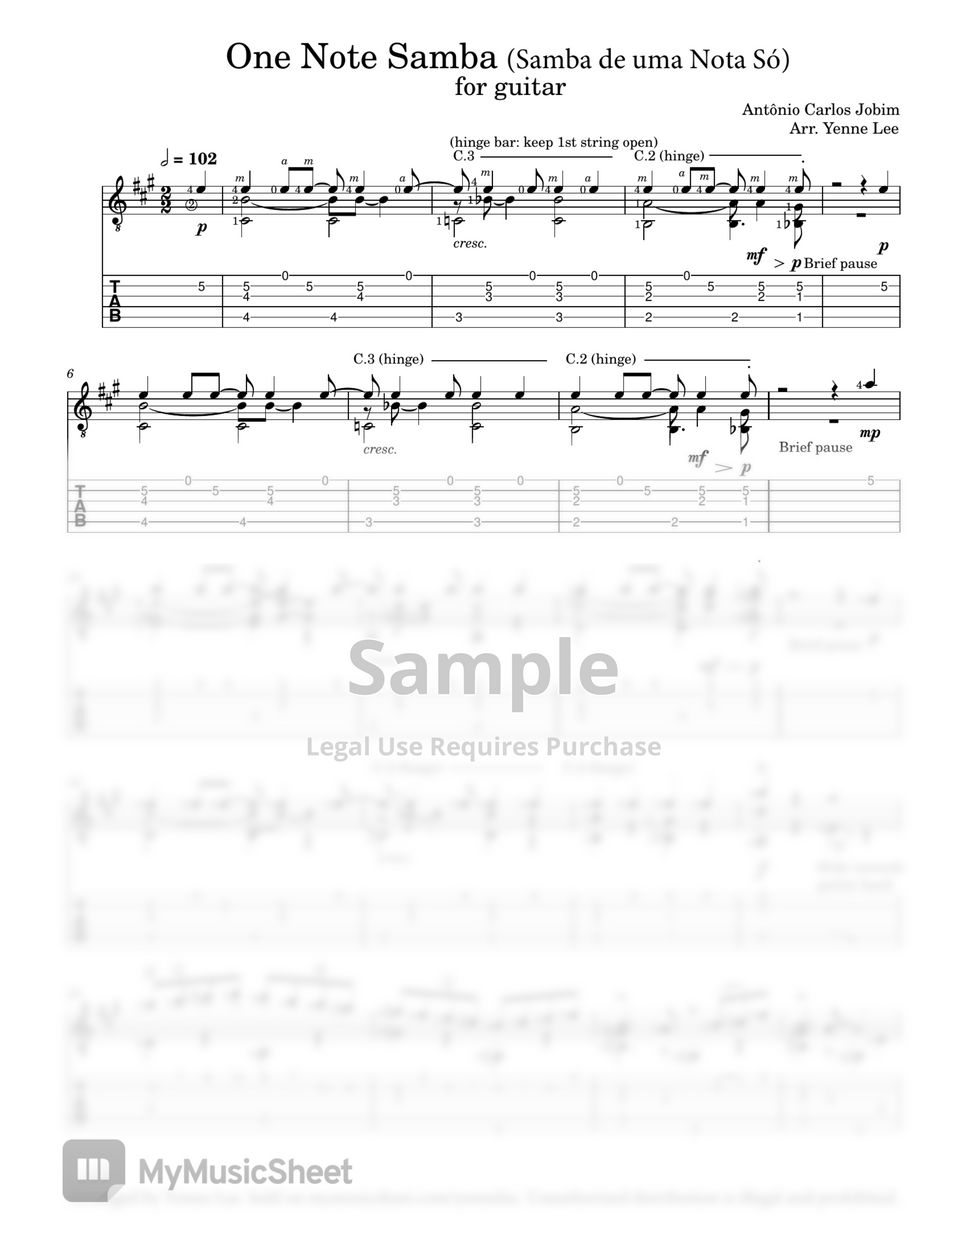 Antonio Carlos Jobim - One Note Samba (Staff+Tab) by Yenne Lee